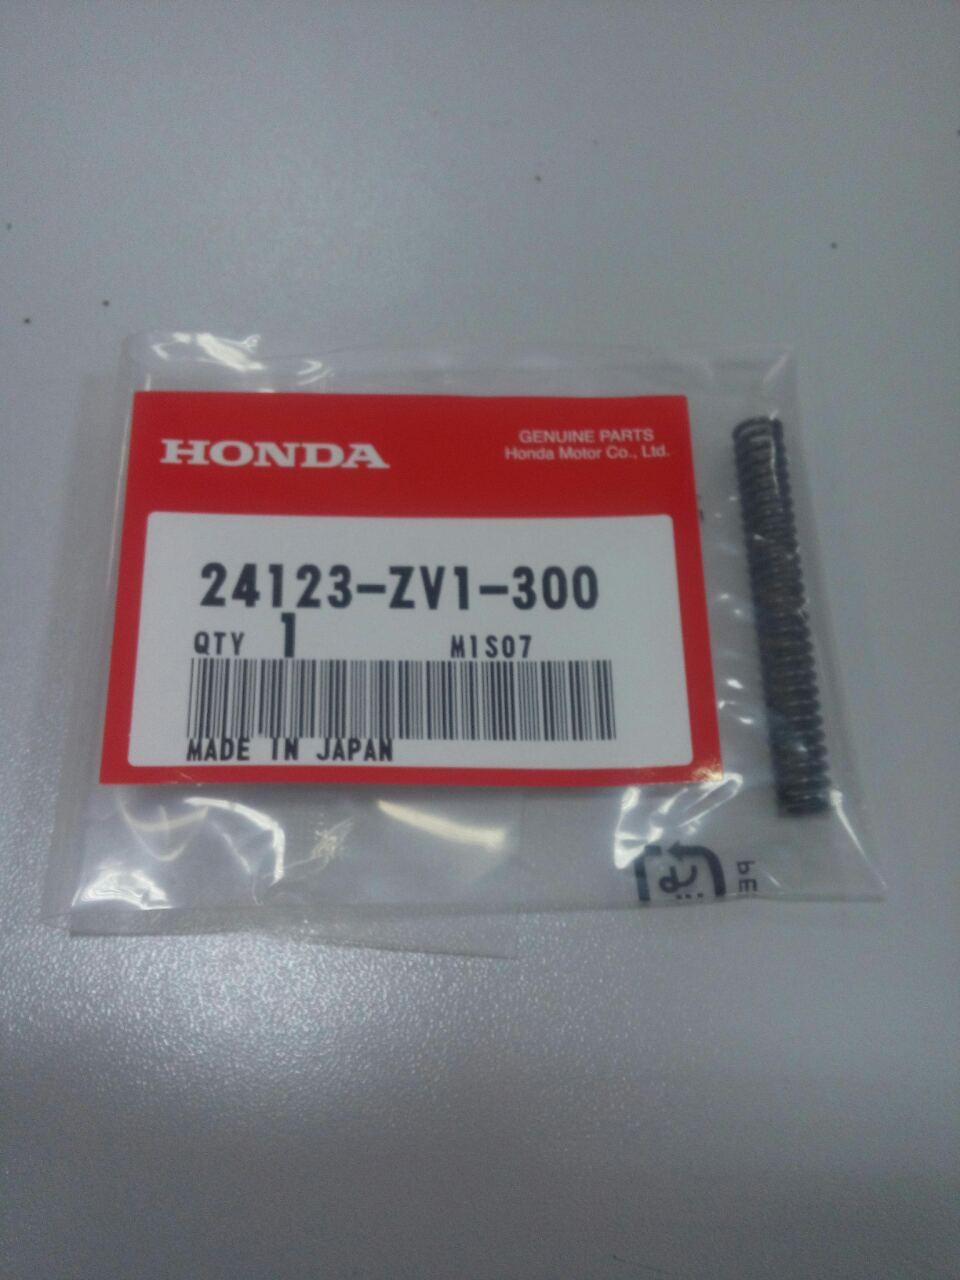 Пружина вала винта Honda  BF8..20, 24123-ZV1-300